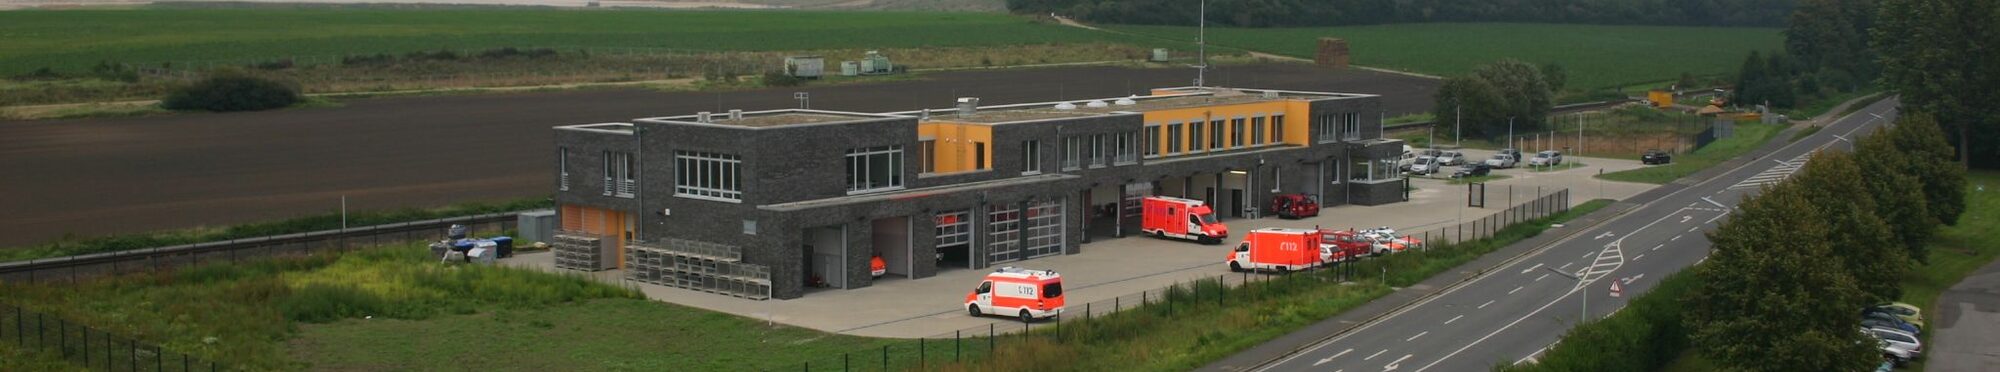 Feuer- und Rettungswache in Bergheim